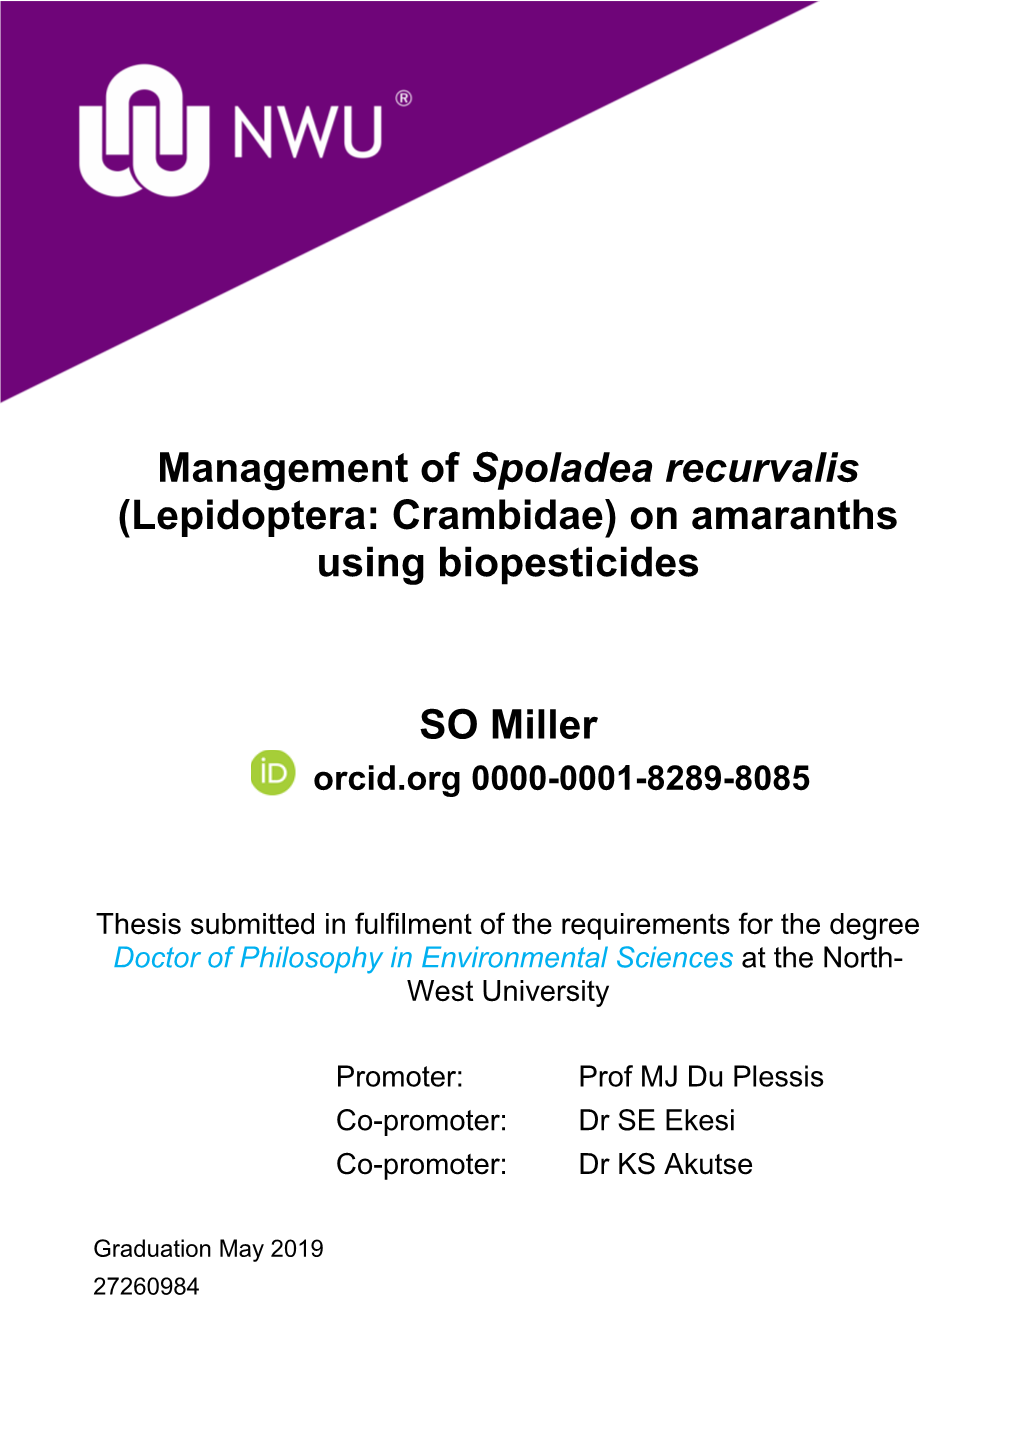 Management of Spoladea Recurvalis (Lepidoptera: Crambidae) on Amaranths Using Biopesticides